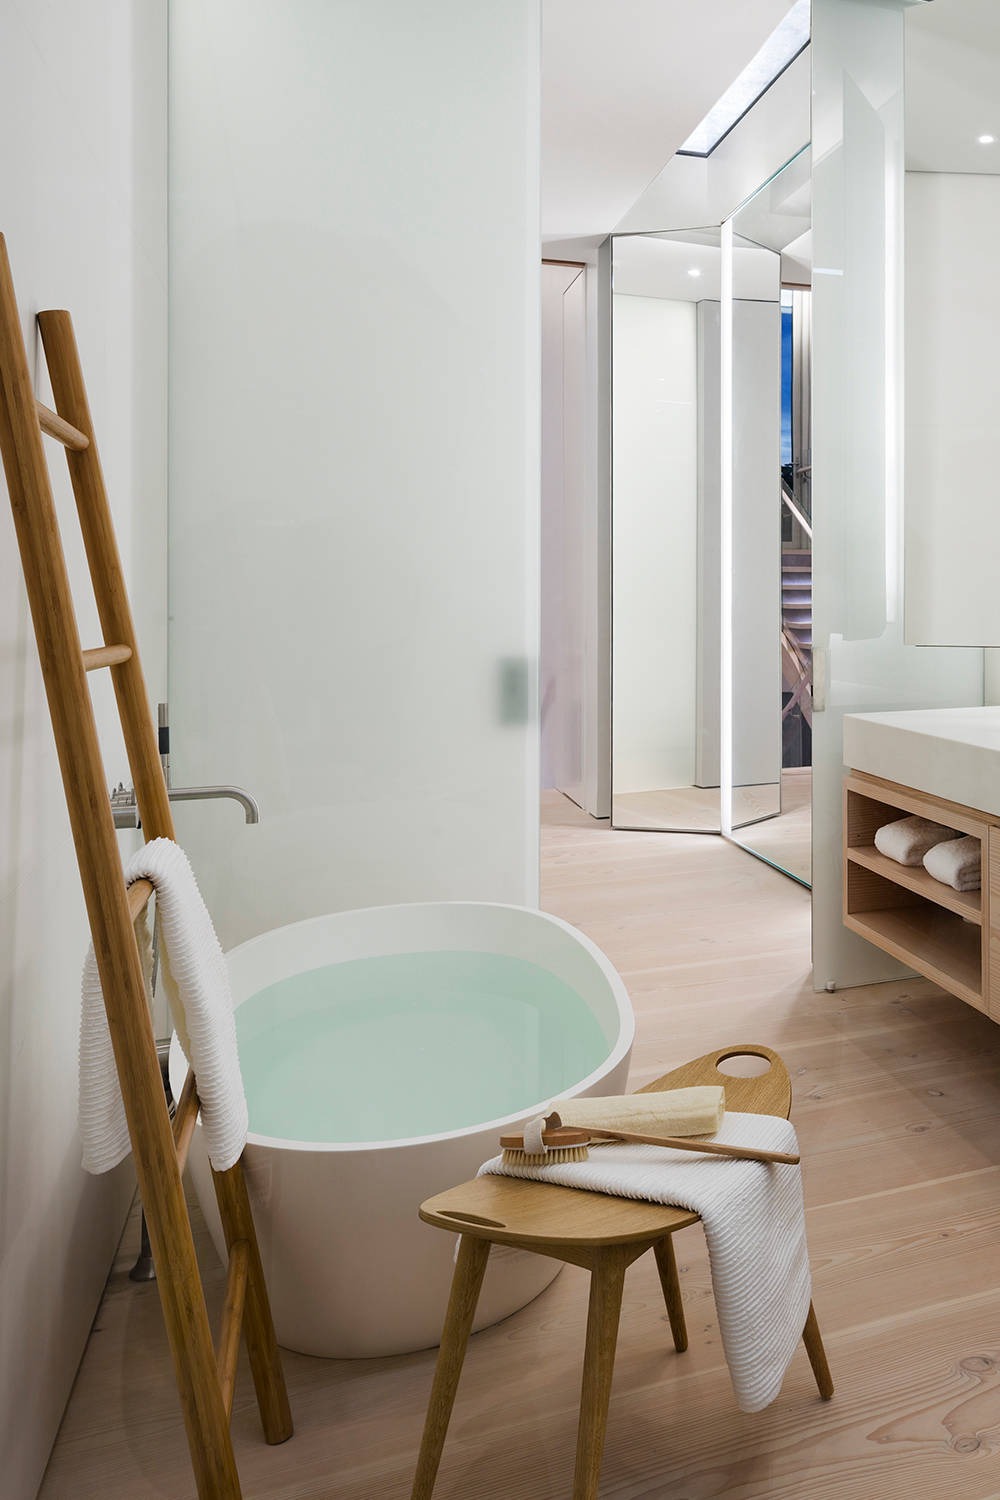 Light Wood Floor Flat Panel Cabinets White Countertops Free Standing Bathtub Towel Rack